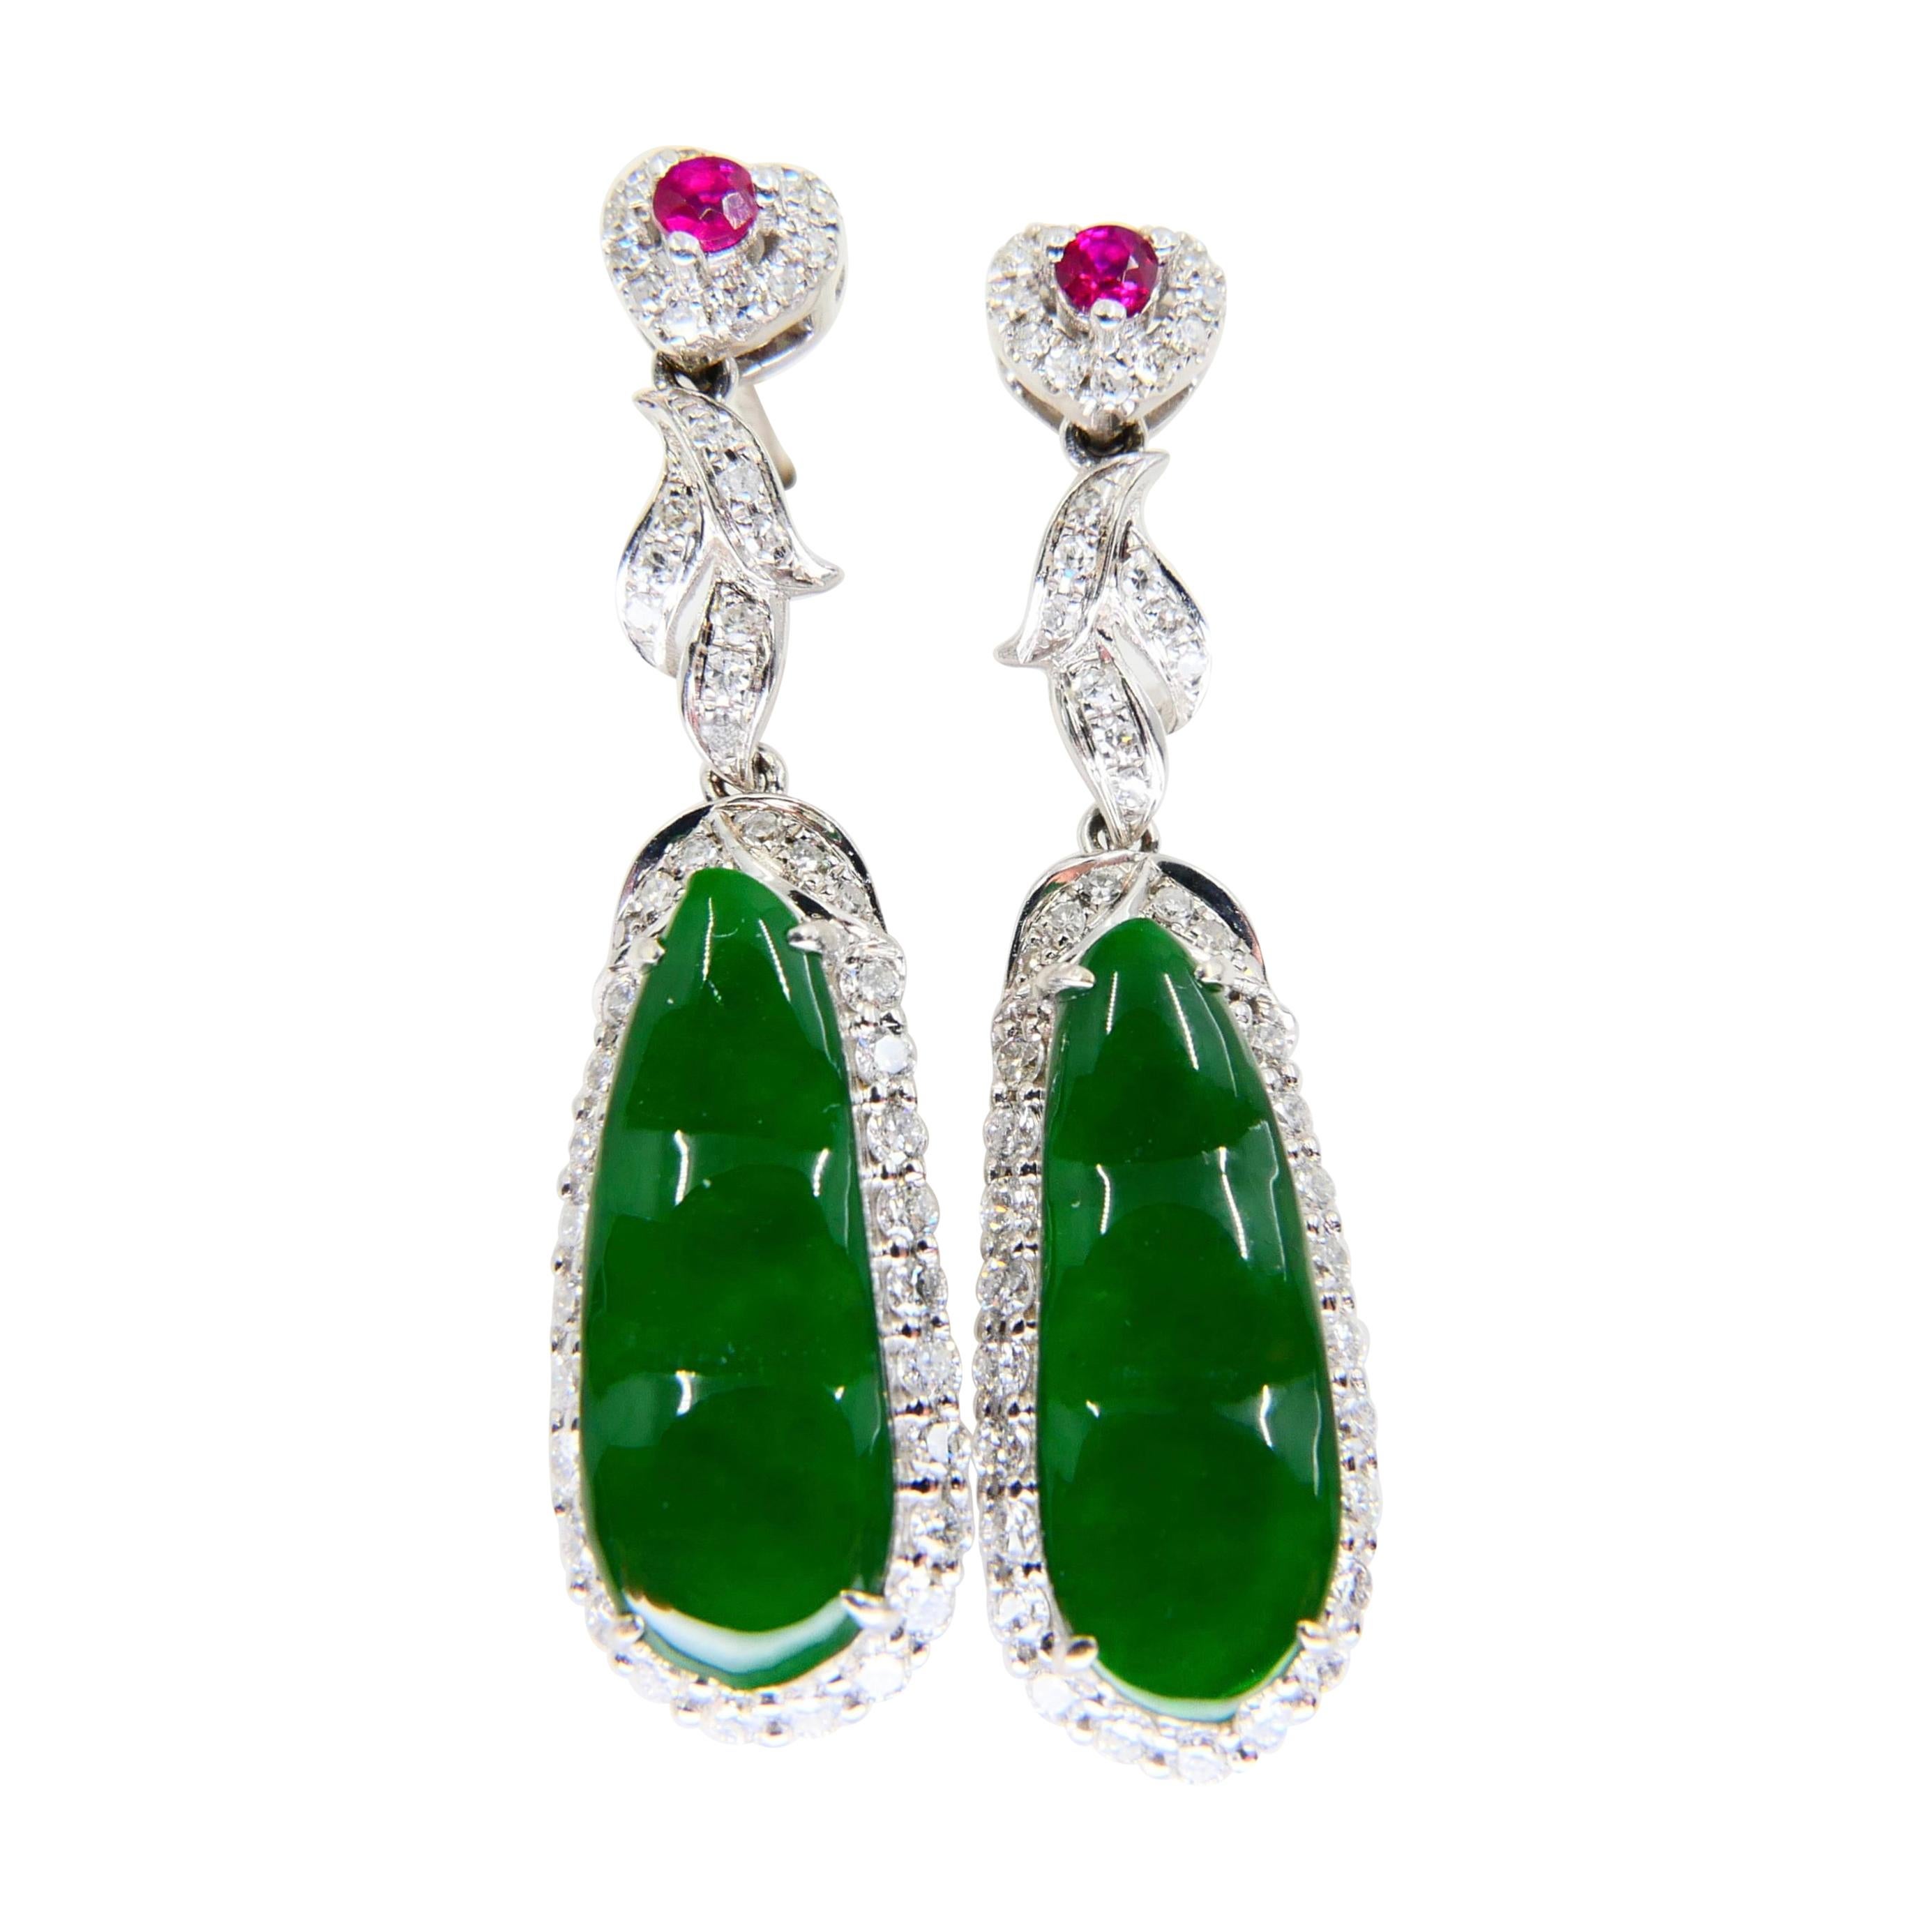 Certified Natural Imperial Jade Peapod, Ruby & Diamond Earrings, Super Glow